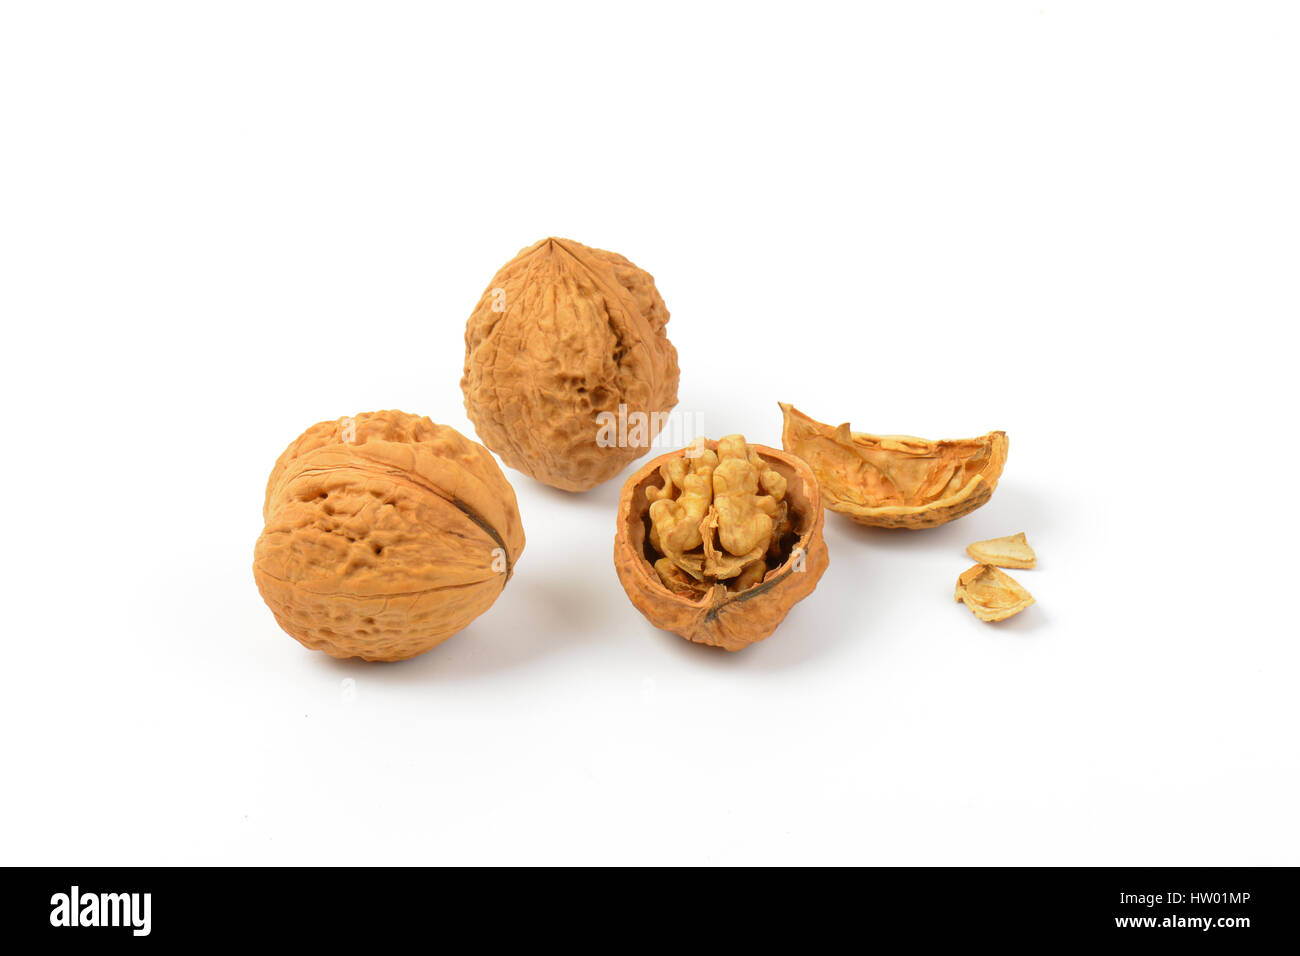 whole and cracked walnuts on white background Stock Photo